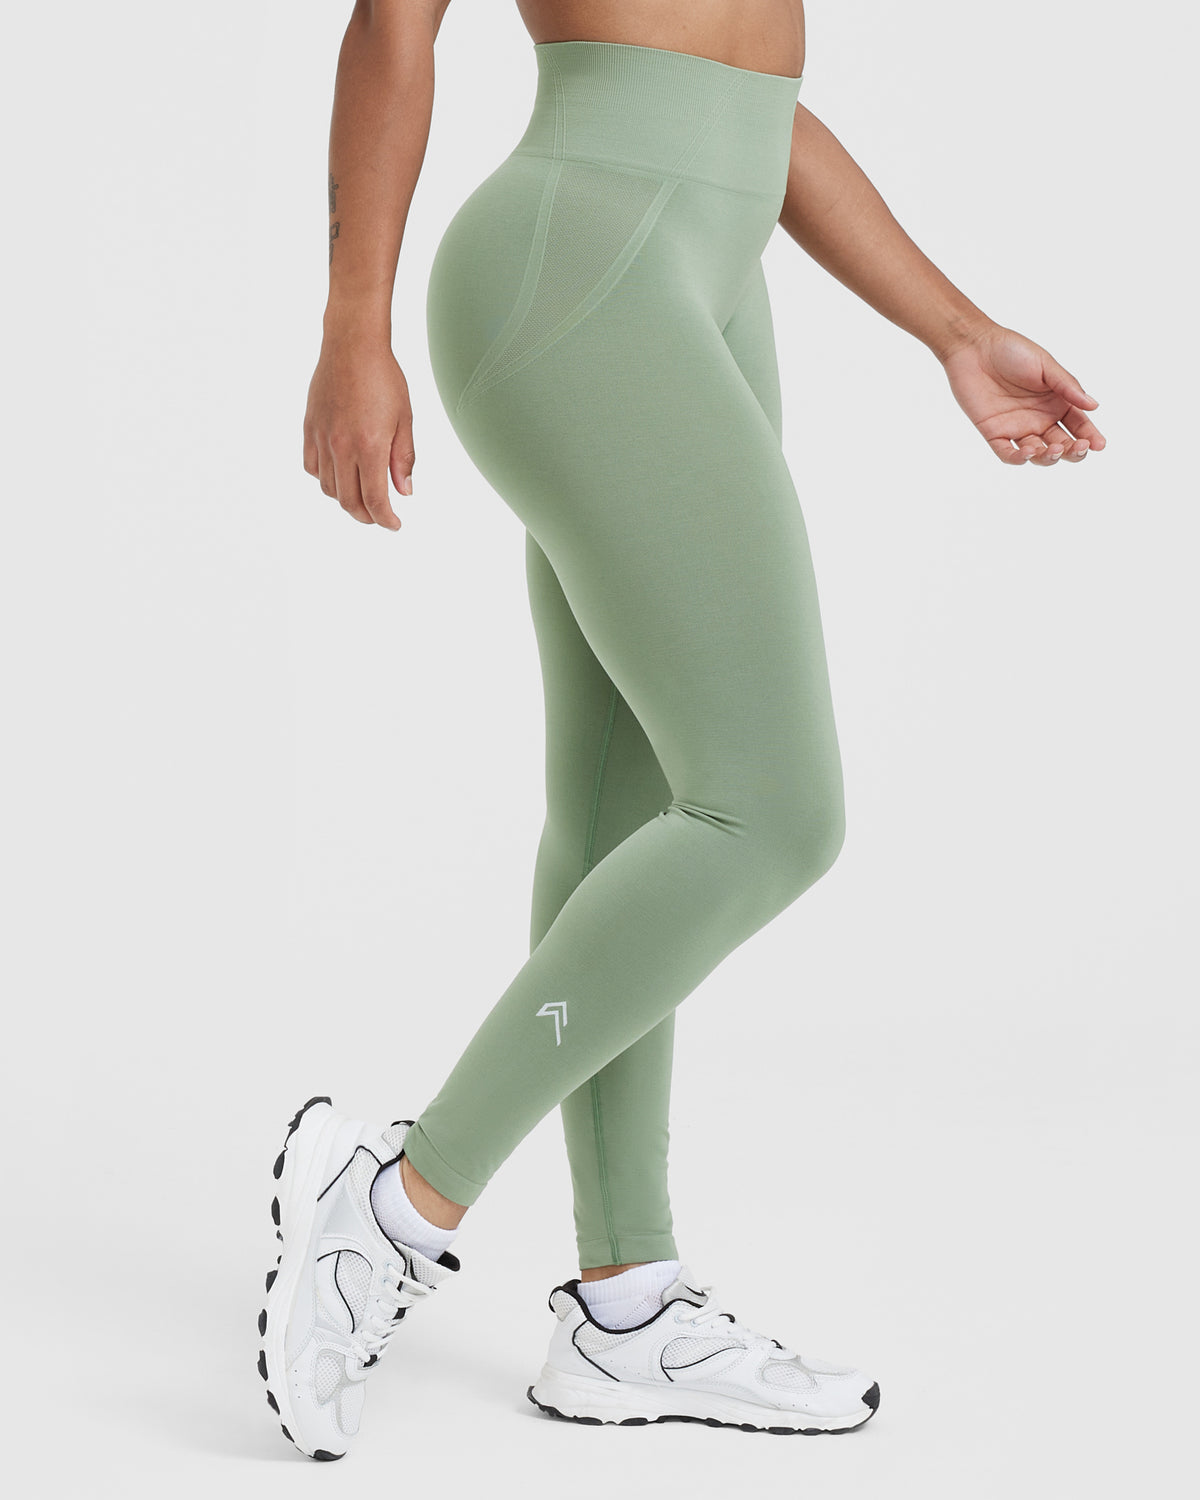 NWT oner active effortless seamless leggings - Athletic apparel